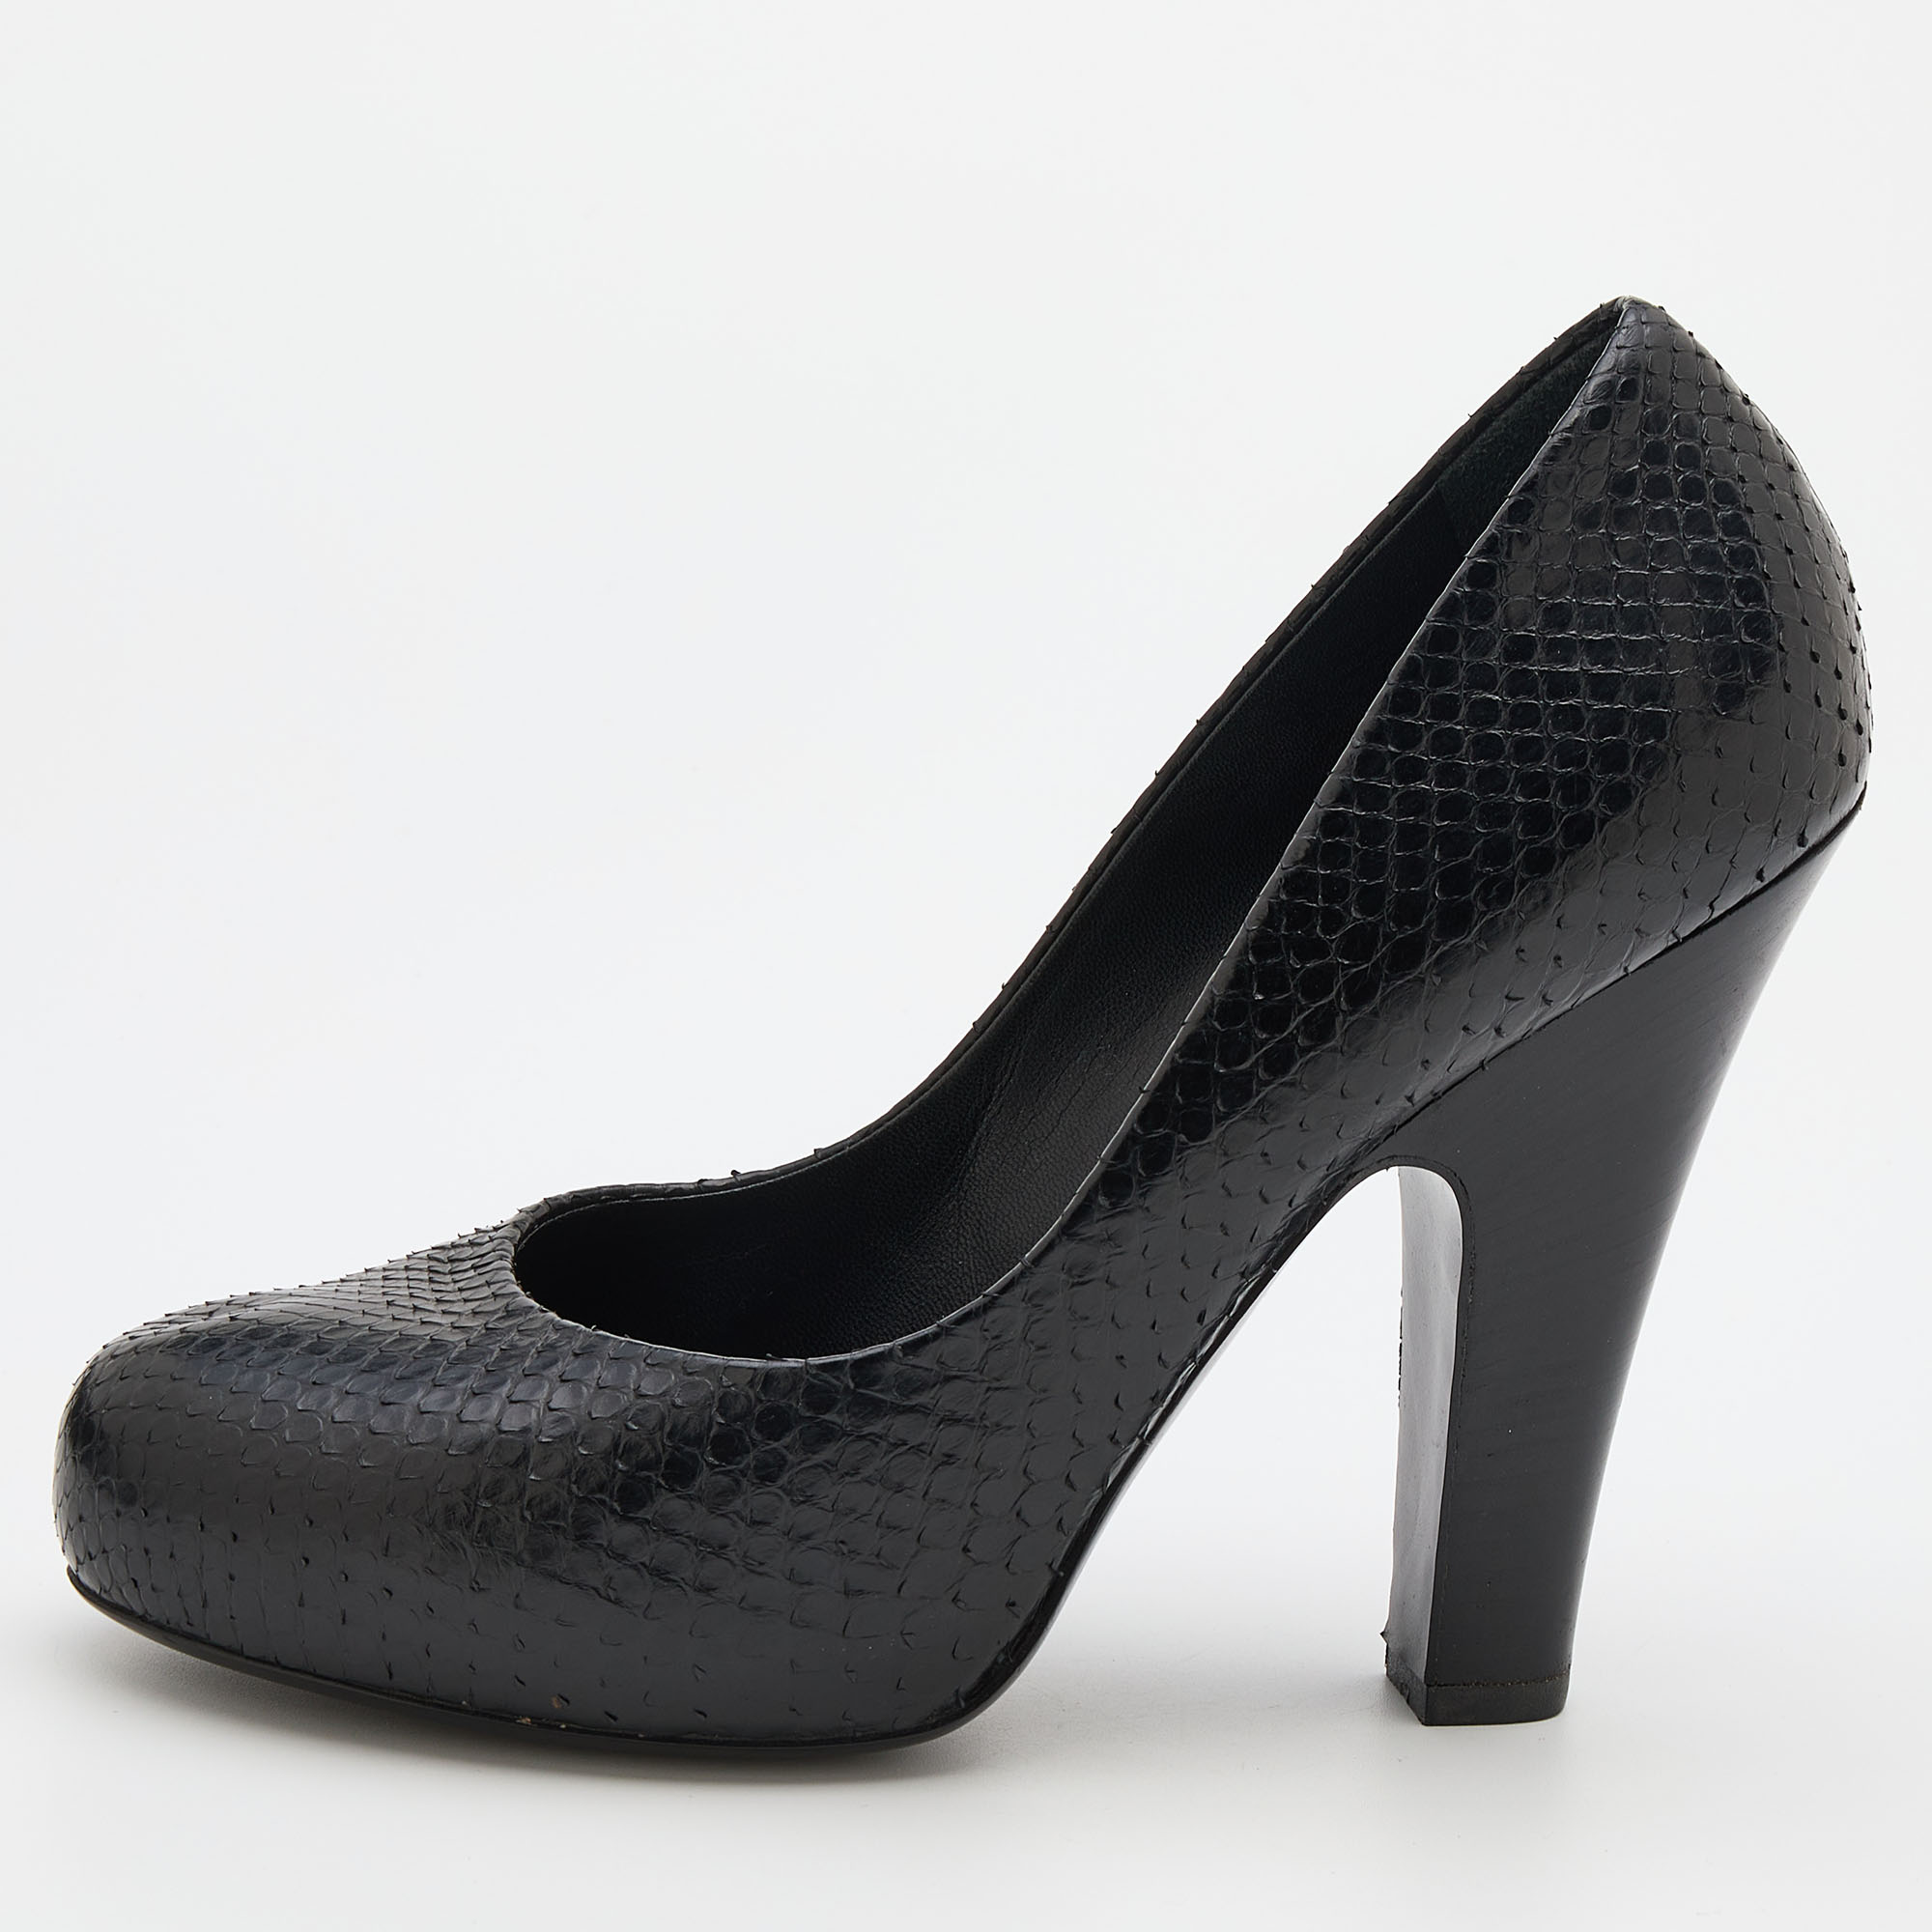 Bottega veneta black python block heel pumps size 38